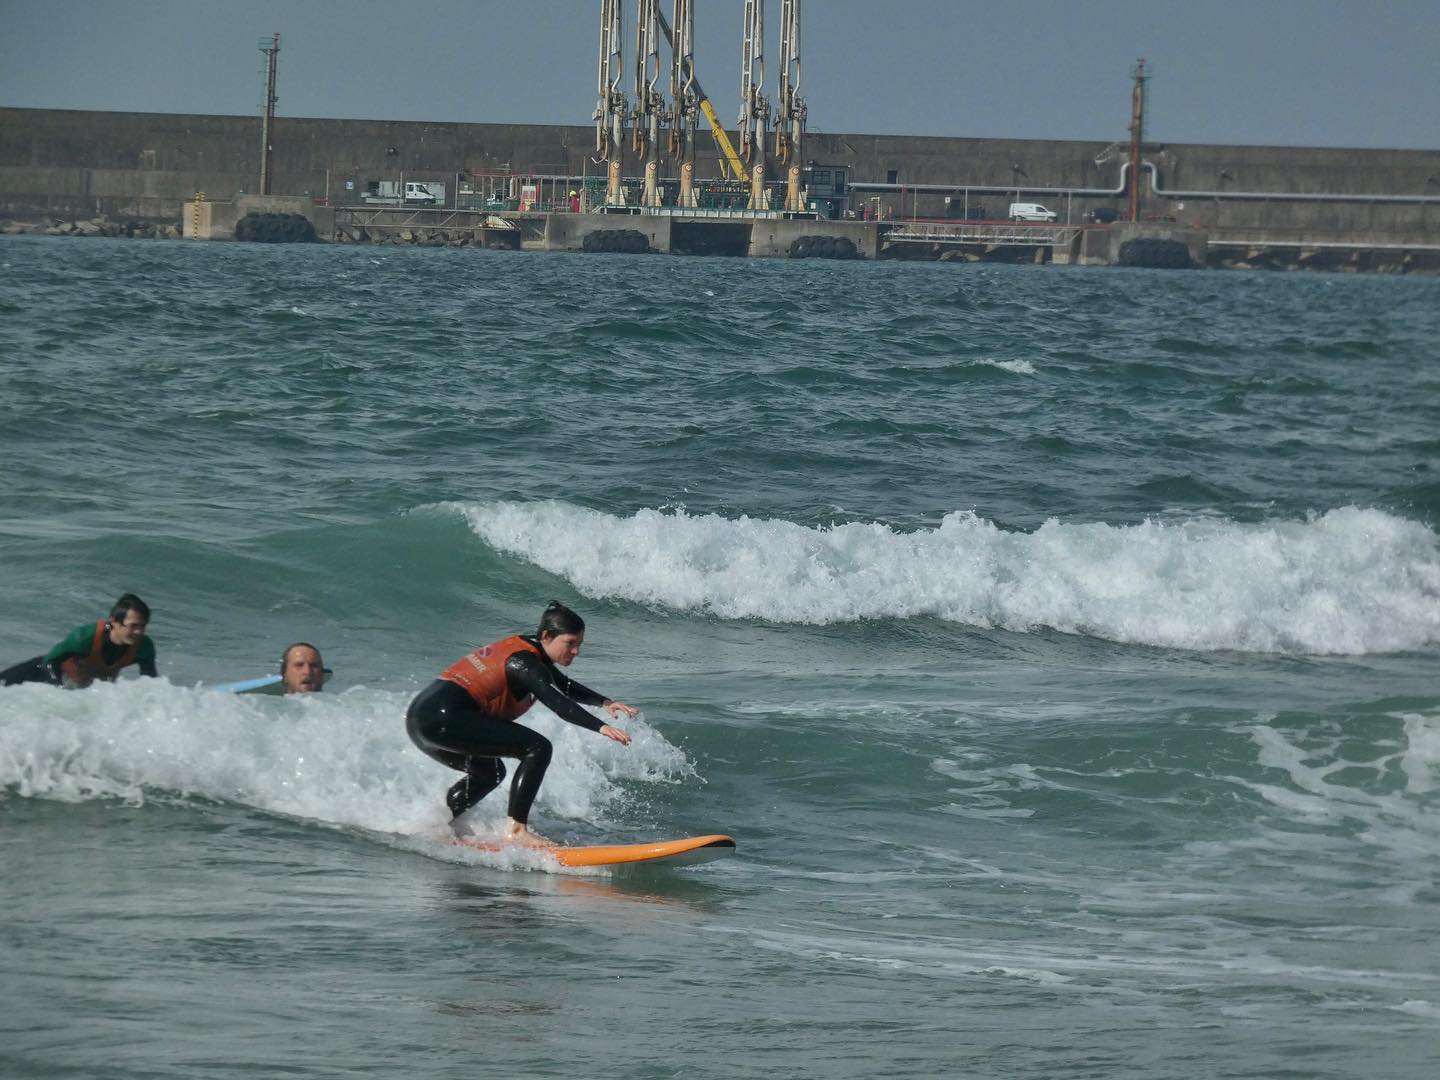 Private Surf Lesson for one in Matosinhos